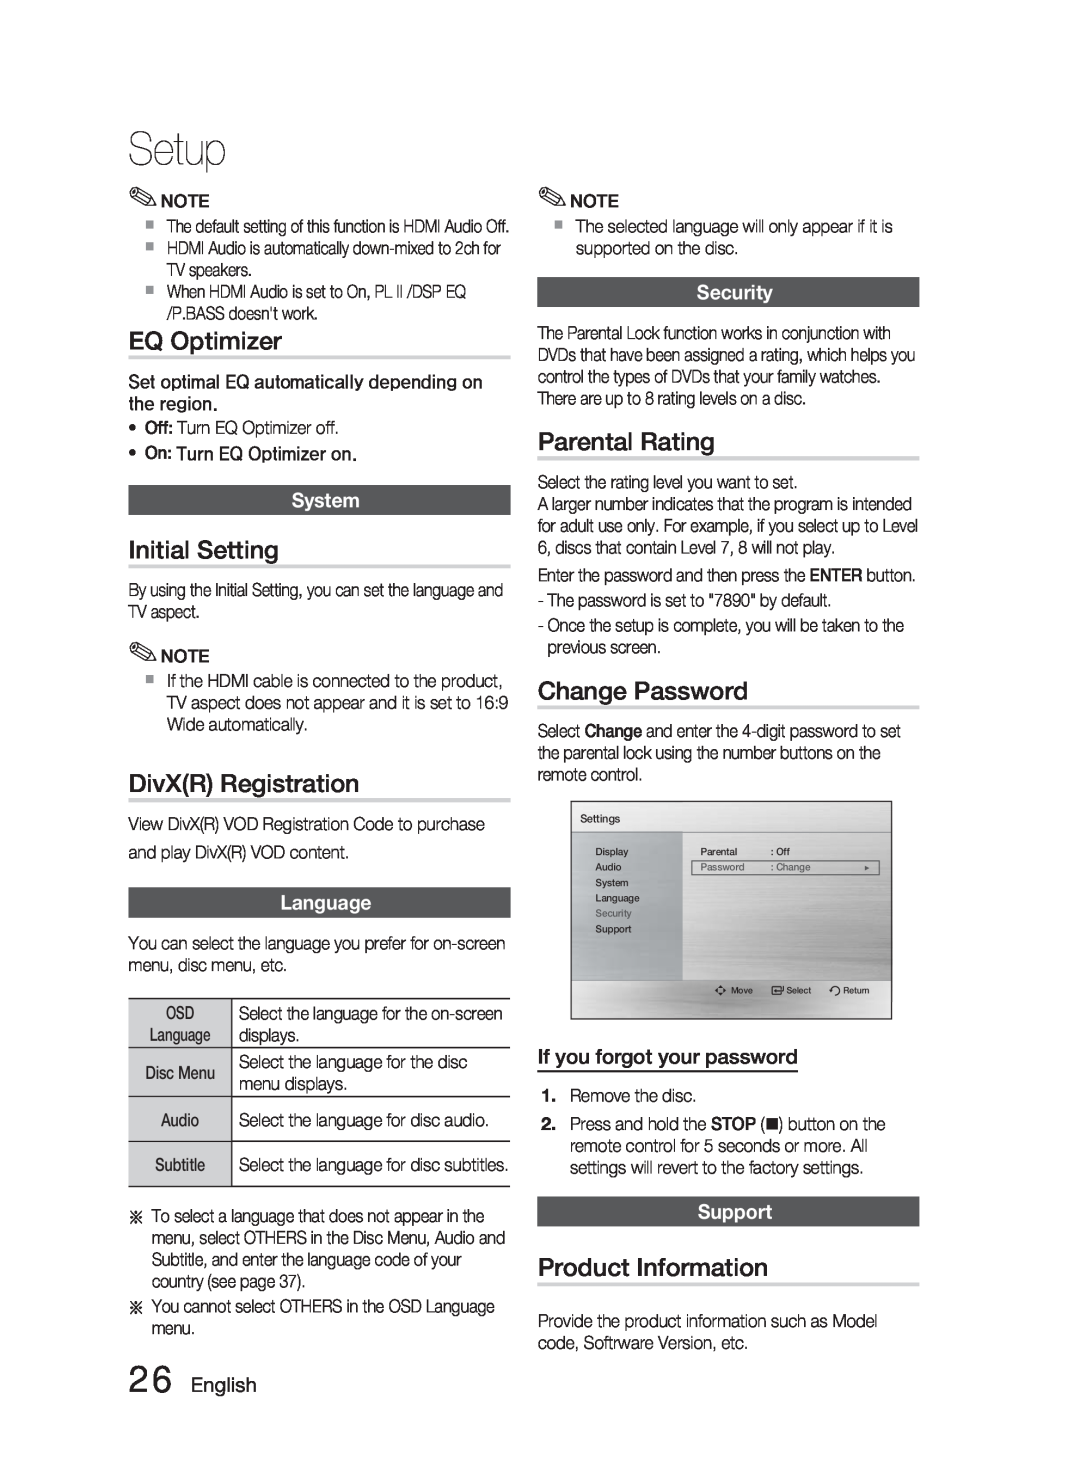 Samsung AH68-02259Q EQ Optimizer, Initial Setting, DivXR Registration, Parental Rating, Change Password, System, Language 